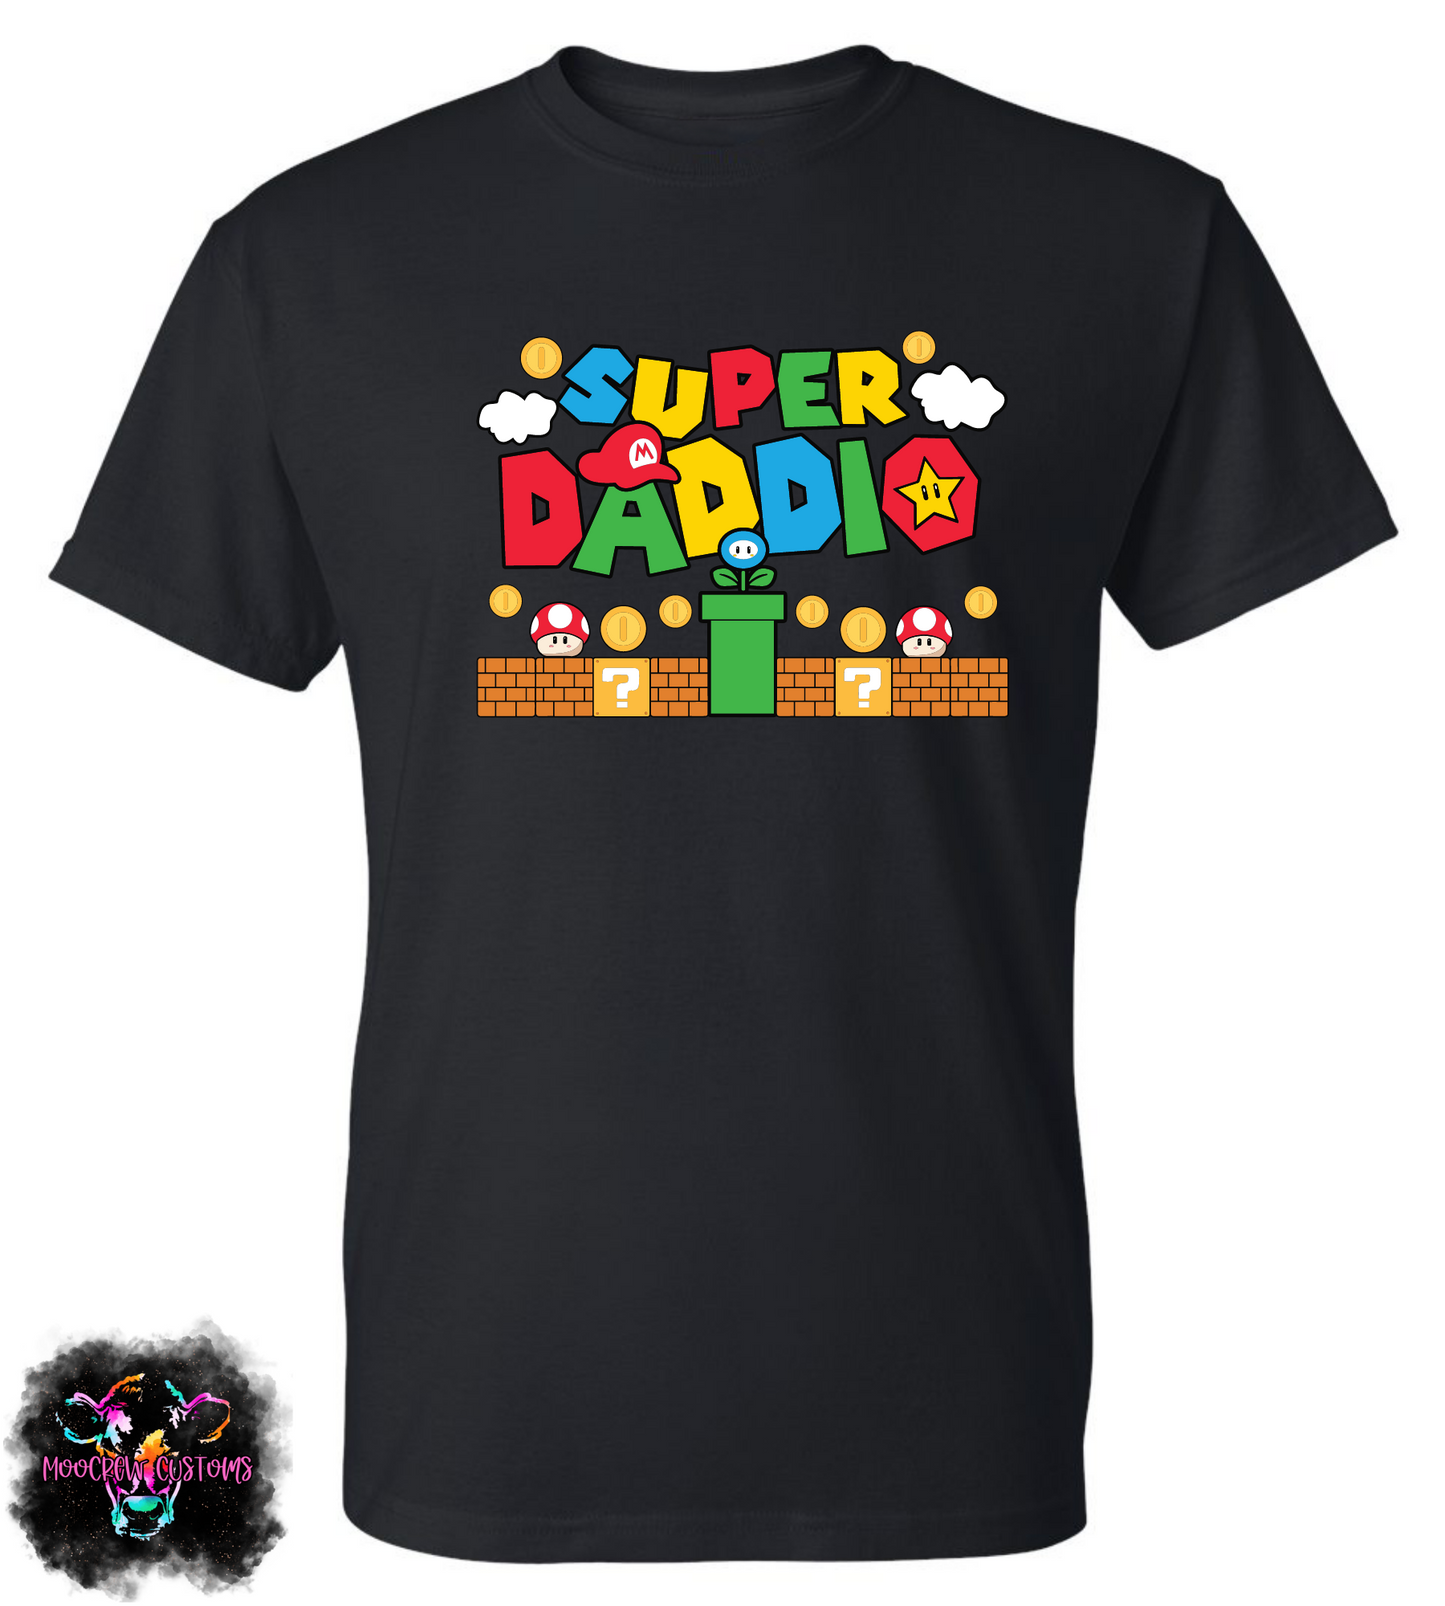 Super Daddio Shirt